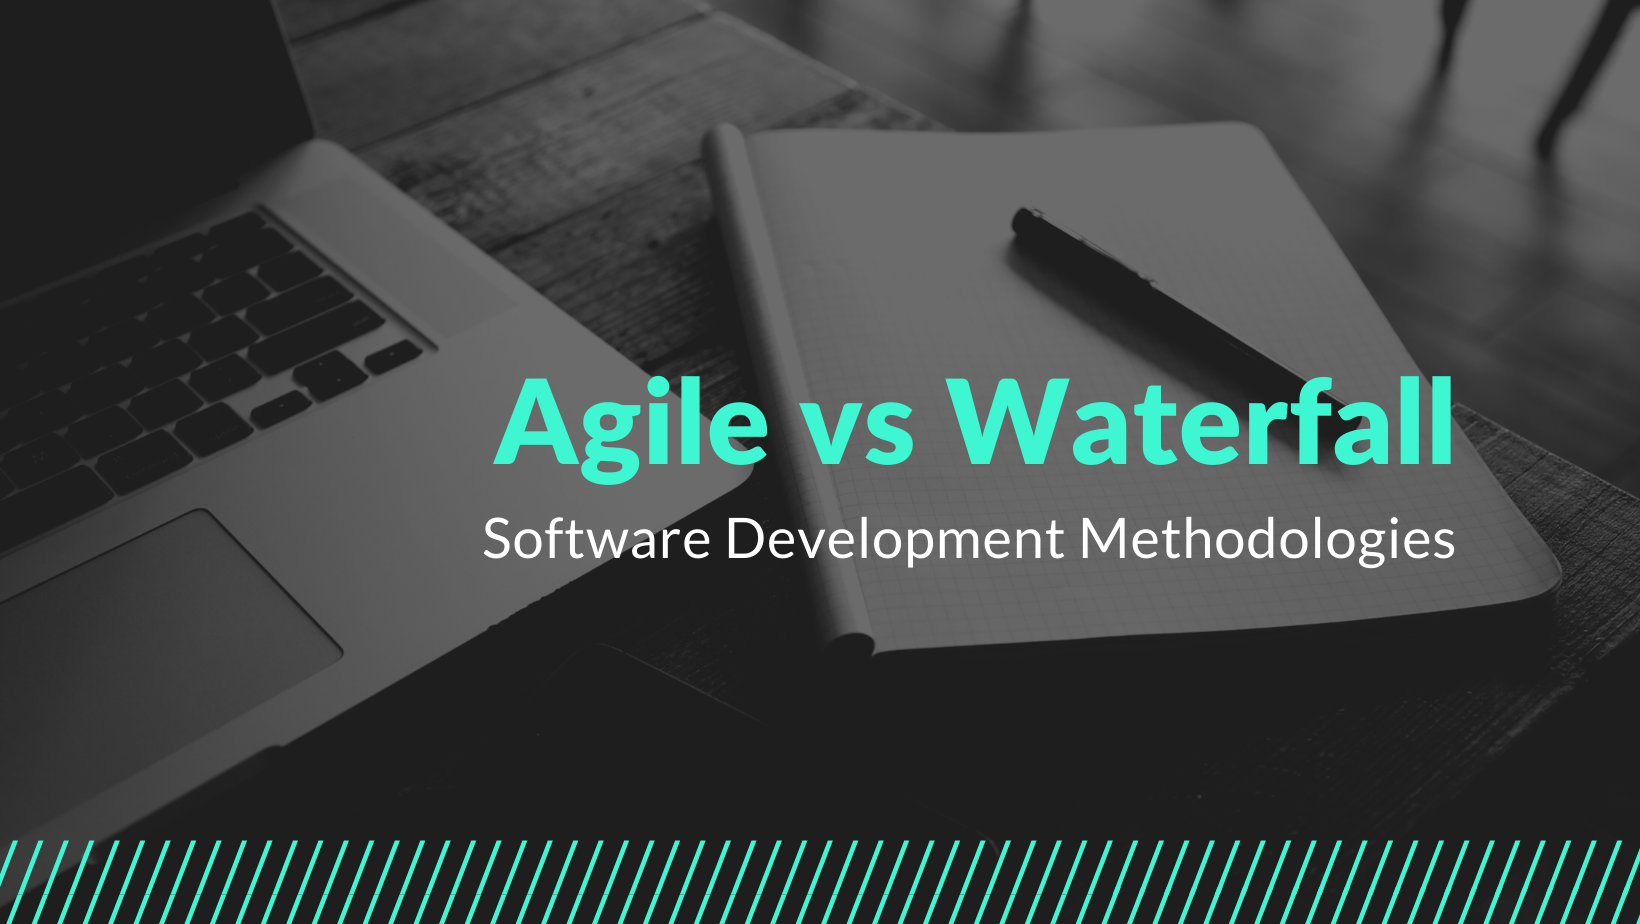 Agile vs Waterfall Software Development Methodologies